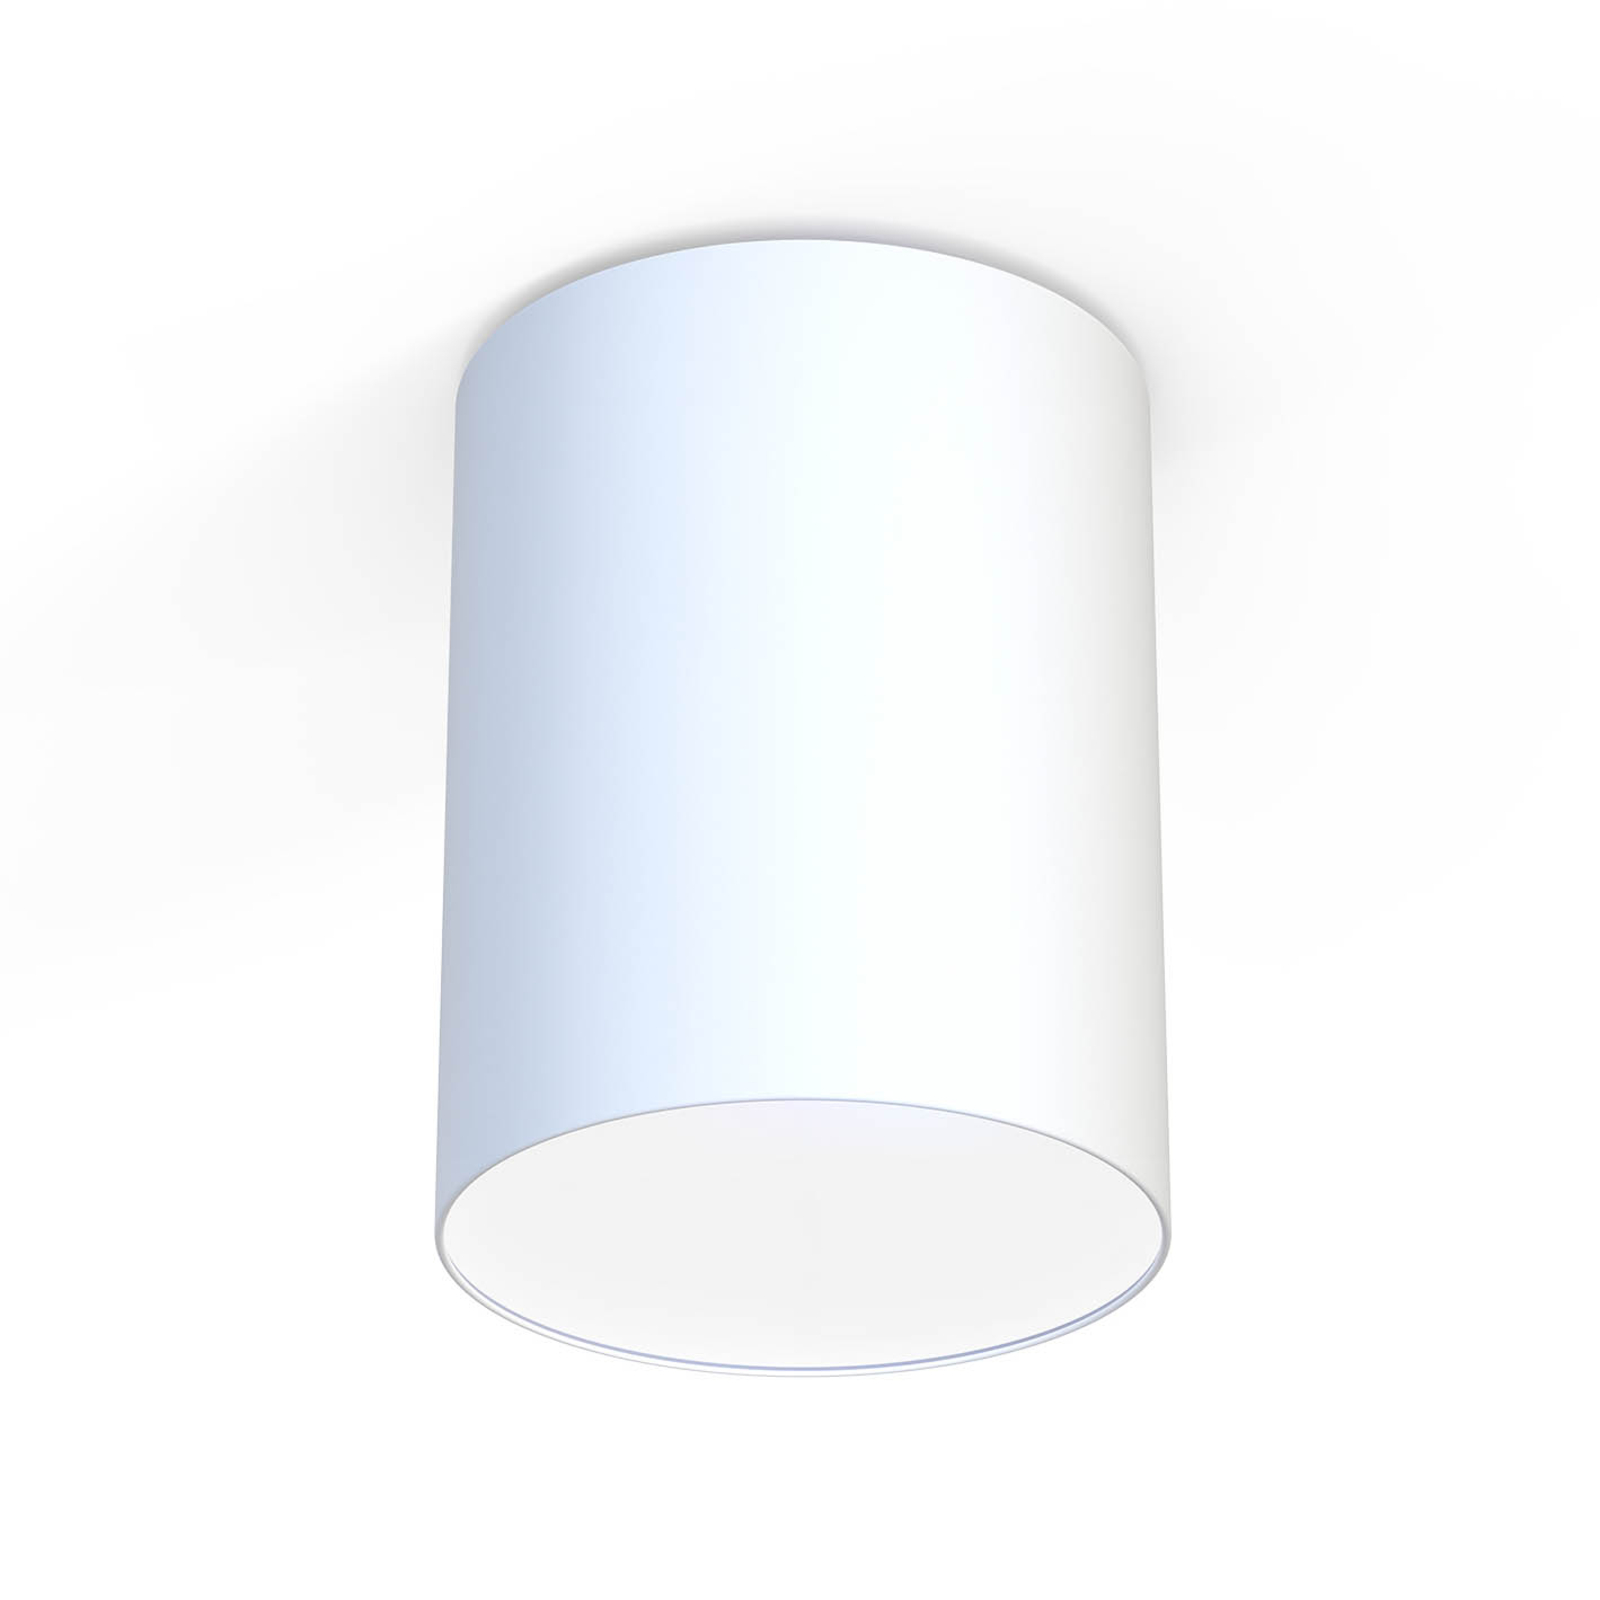 Cameron plafondlamp, wit, Ø 30 cm